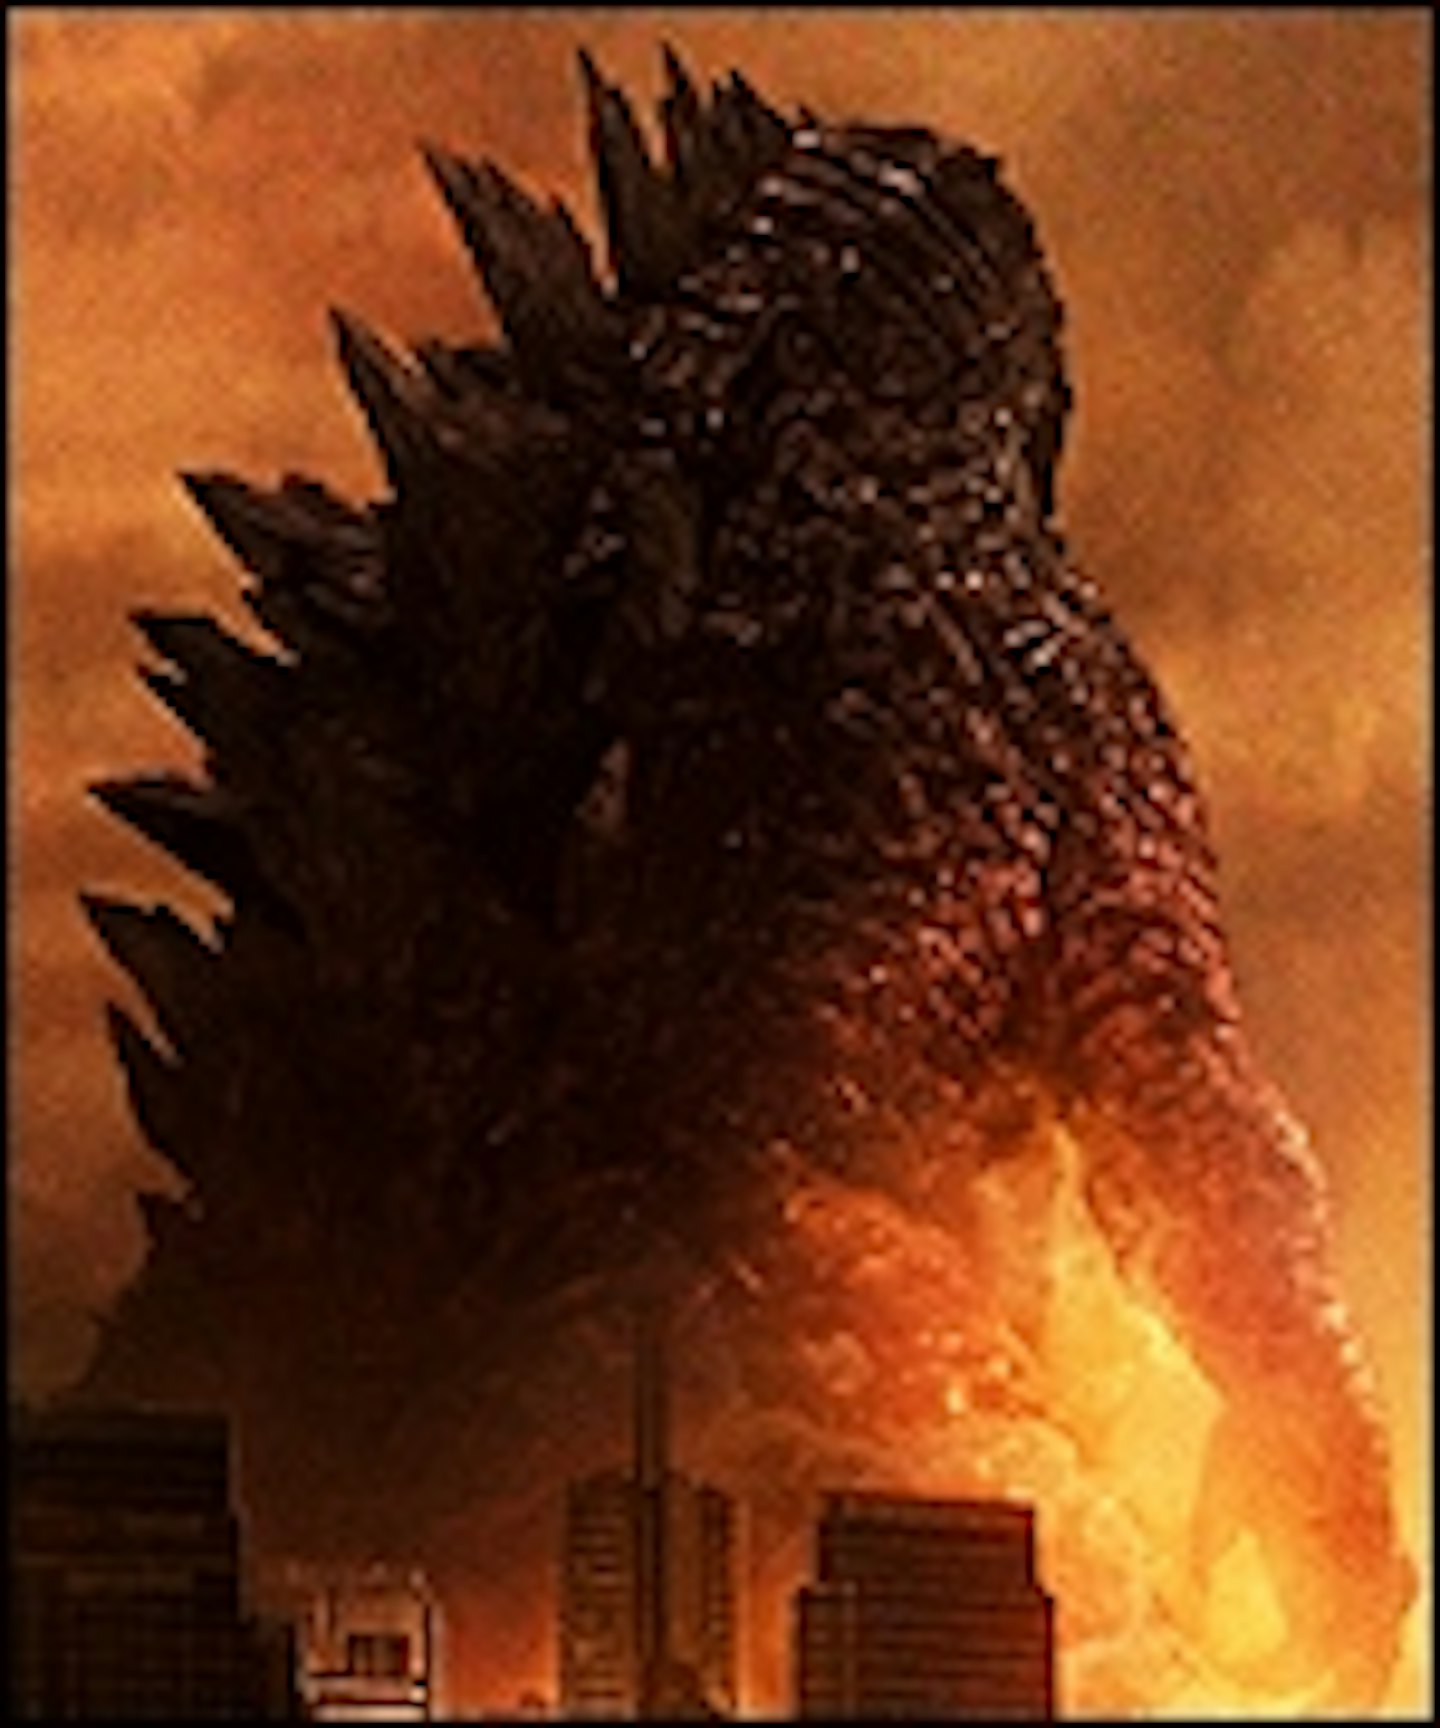 New Godzilla Poster Stomps In